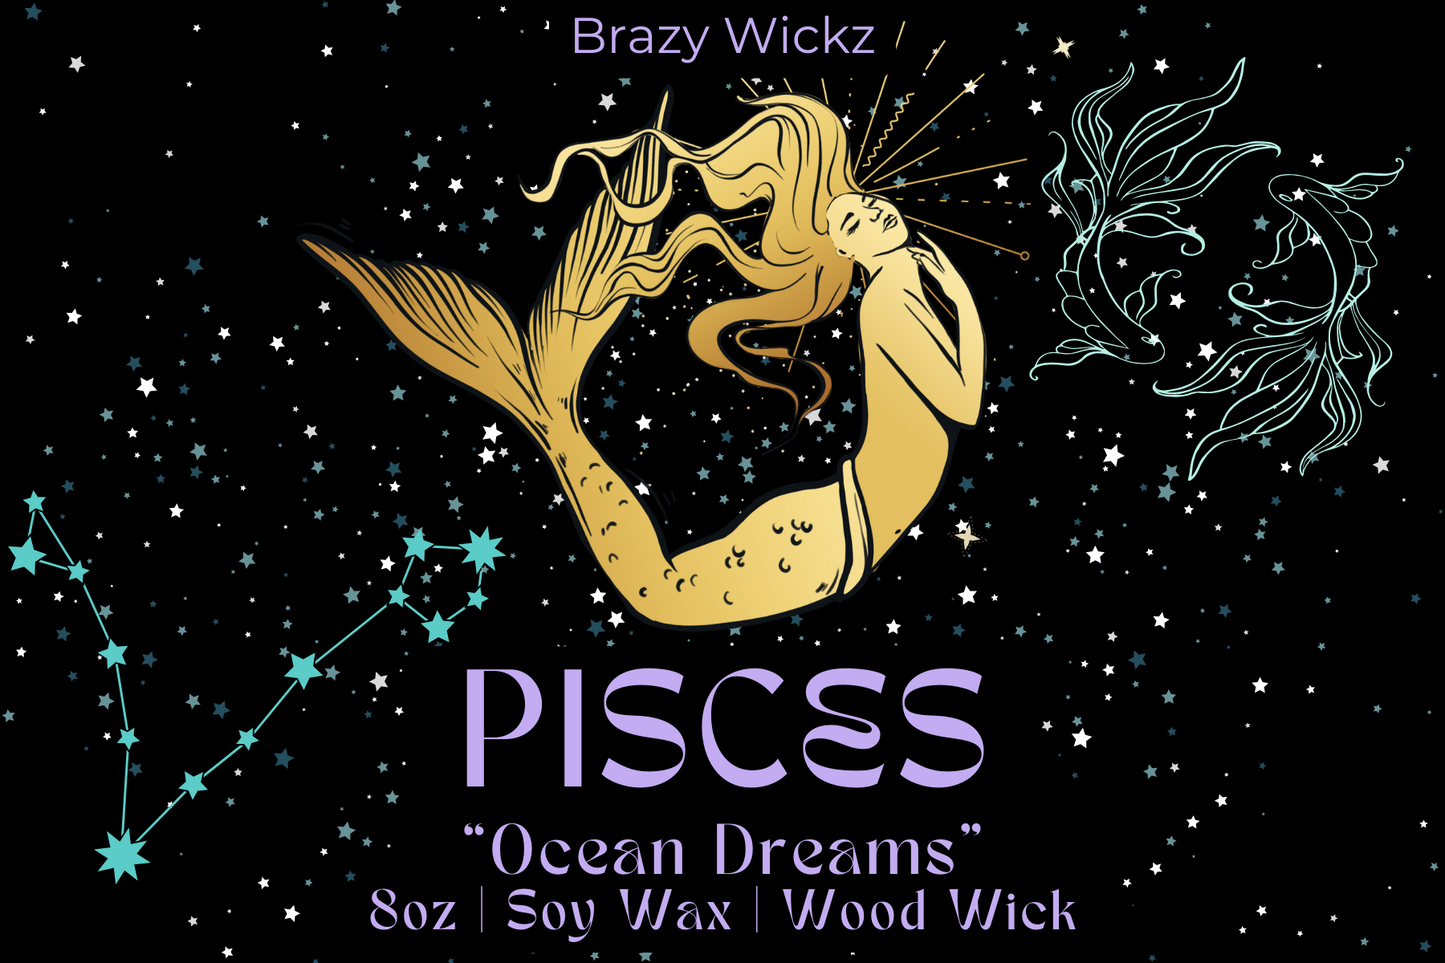 Pisces "Ocean Dreams" -Horoscope Collection